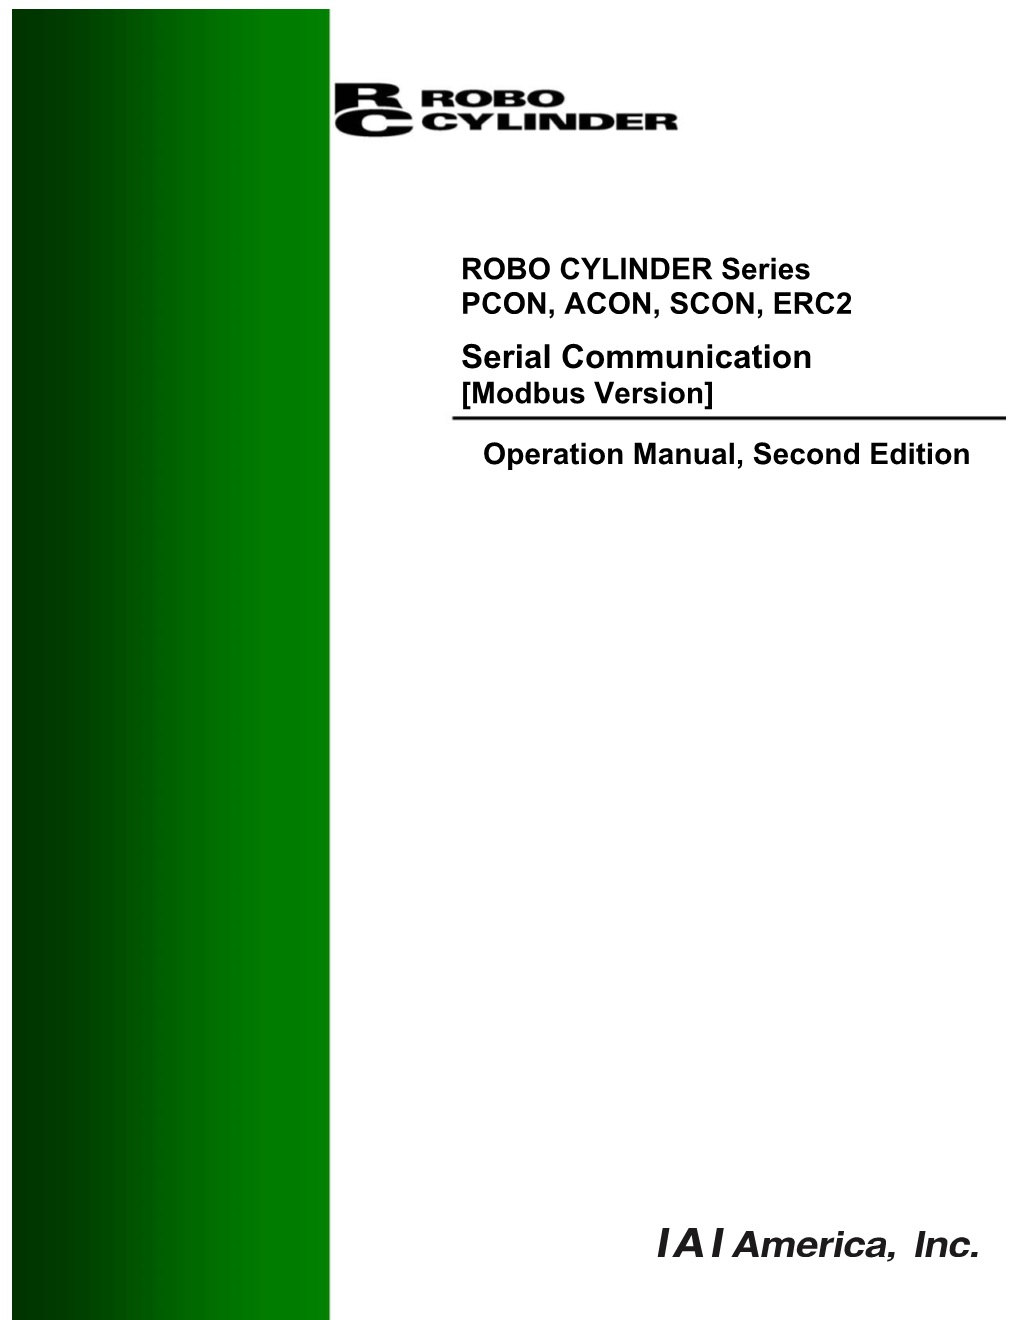 Serial Communication [Modbus Version]